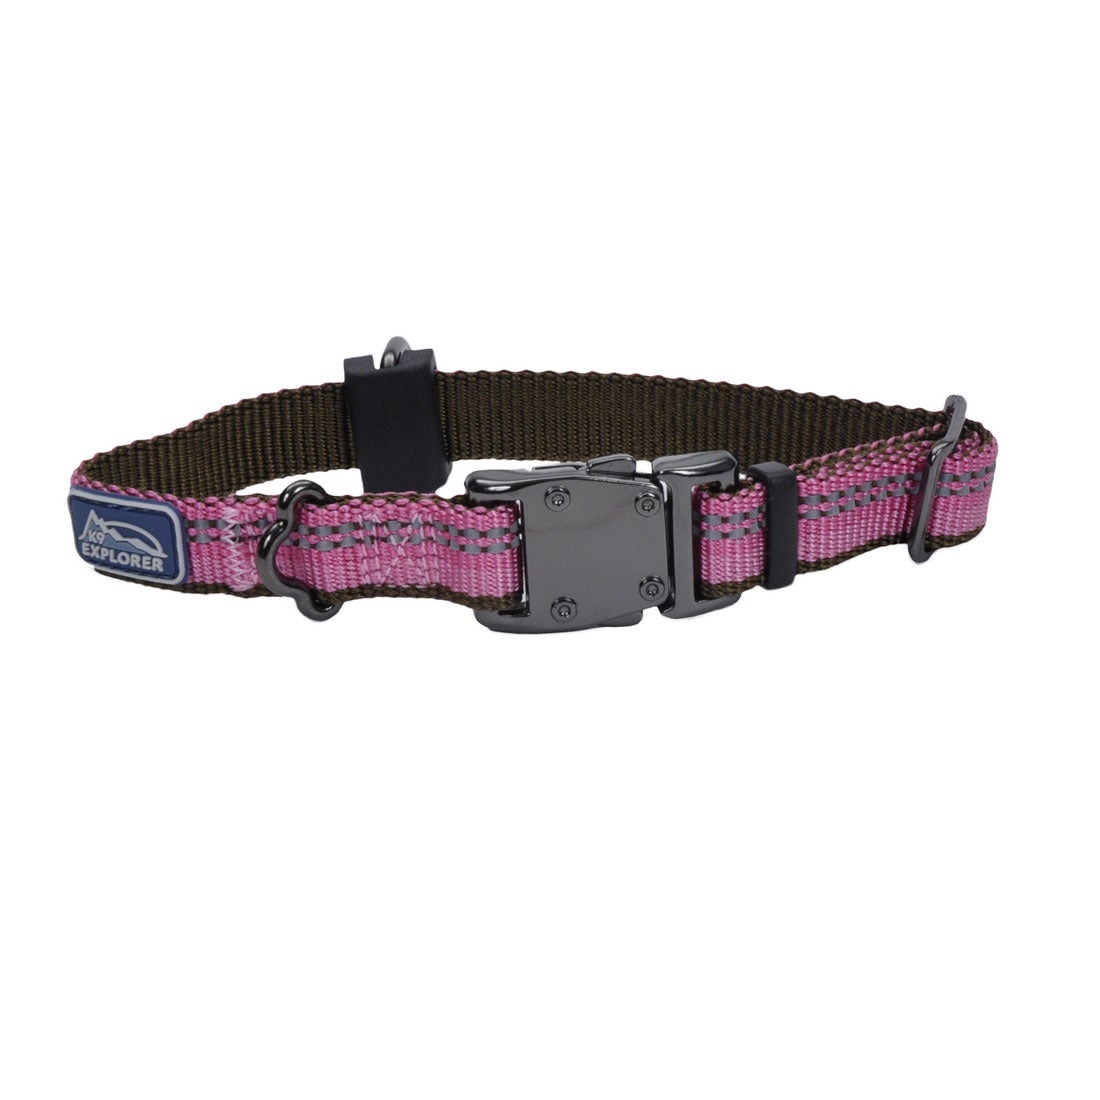 Coastal Pet Products, Coastal Pet K9 Explorer Reflective Adjustable Dog Collar